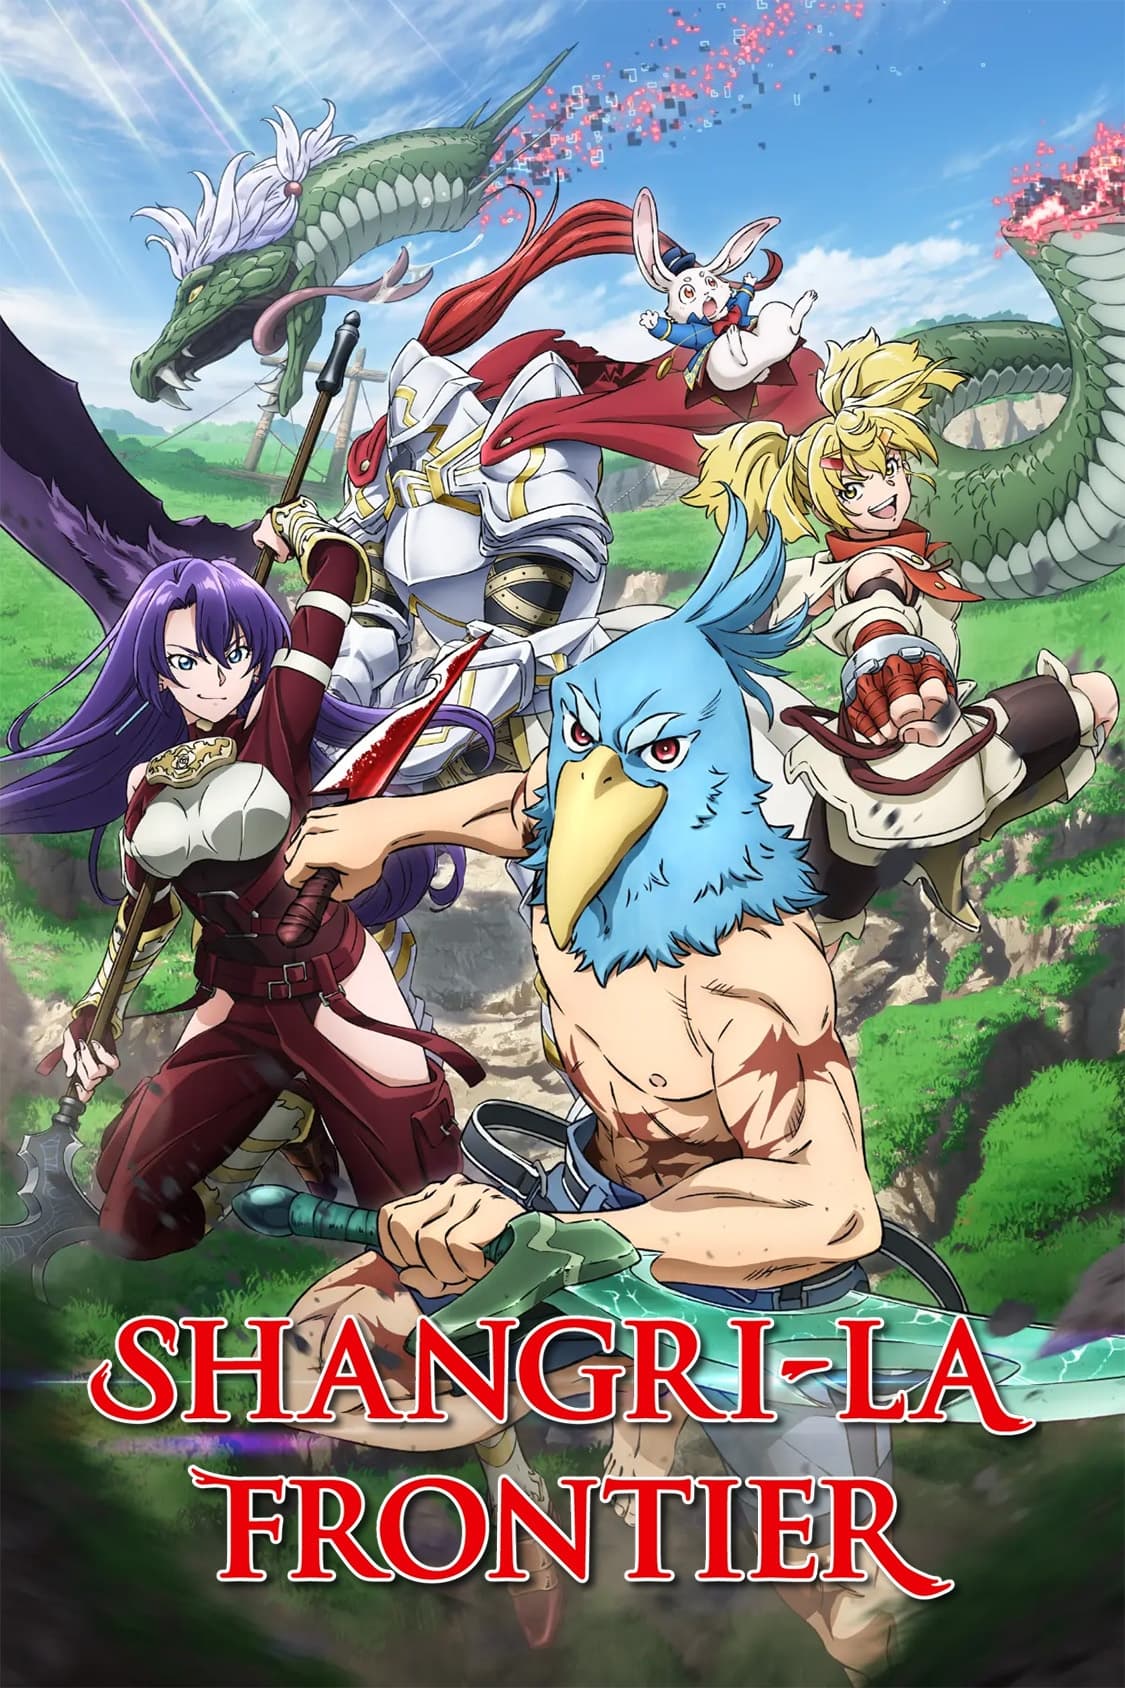 Shangri-La Frontier Season 2: Release Date Announced!